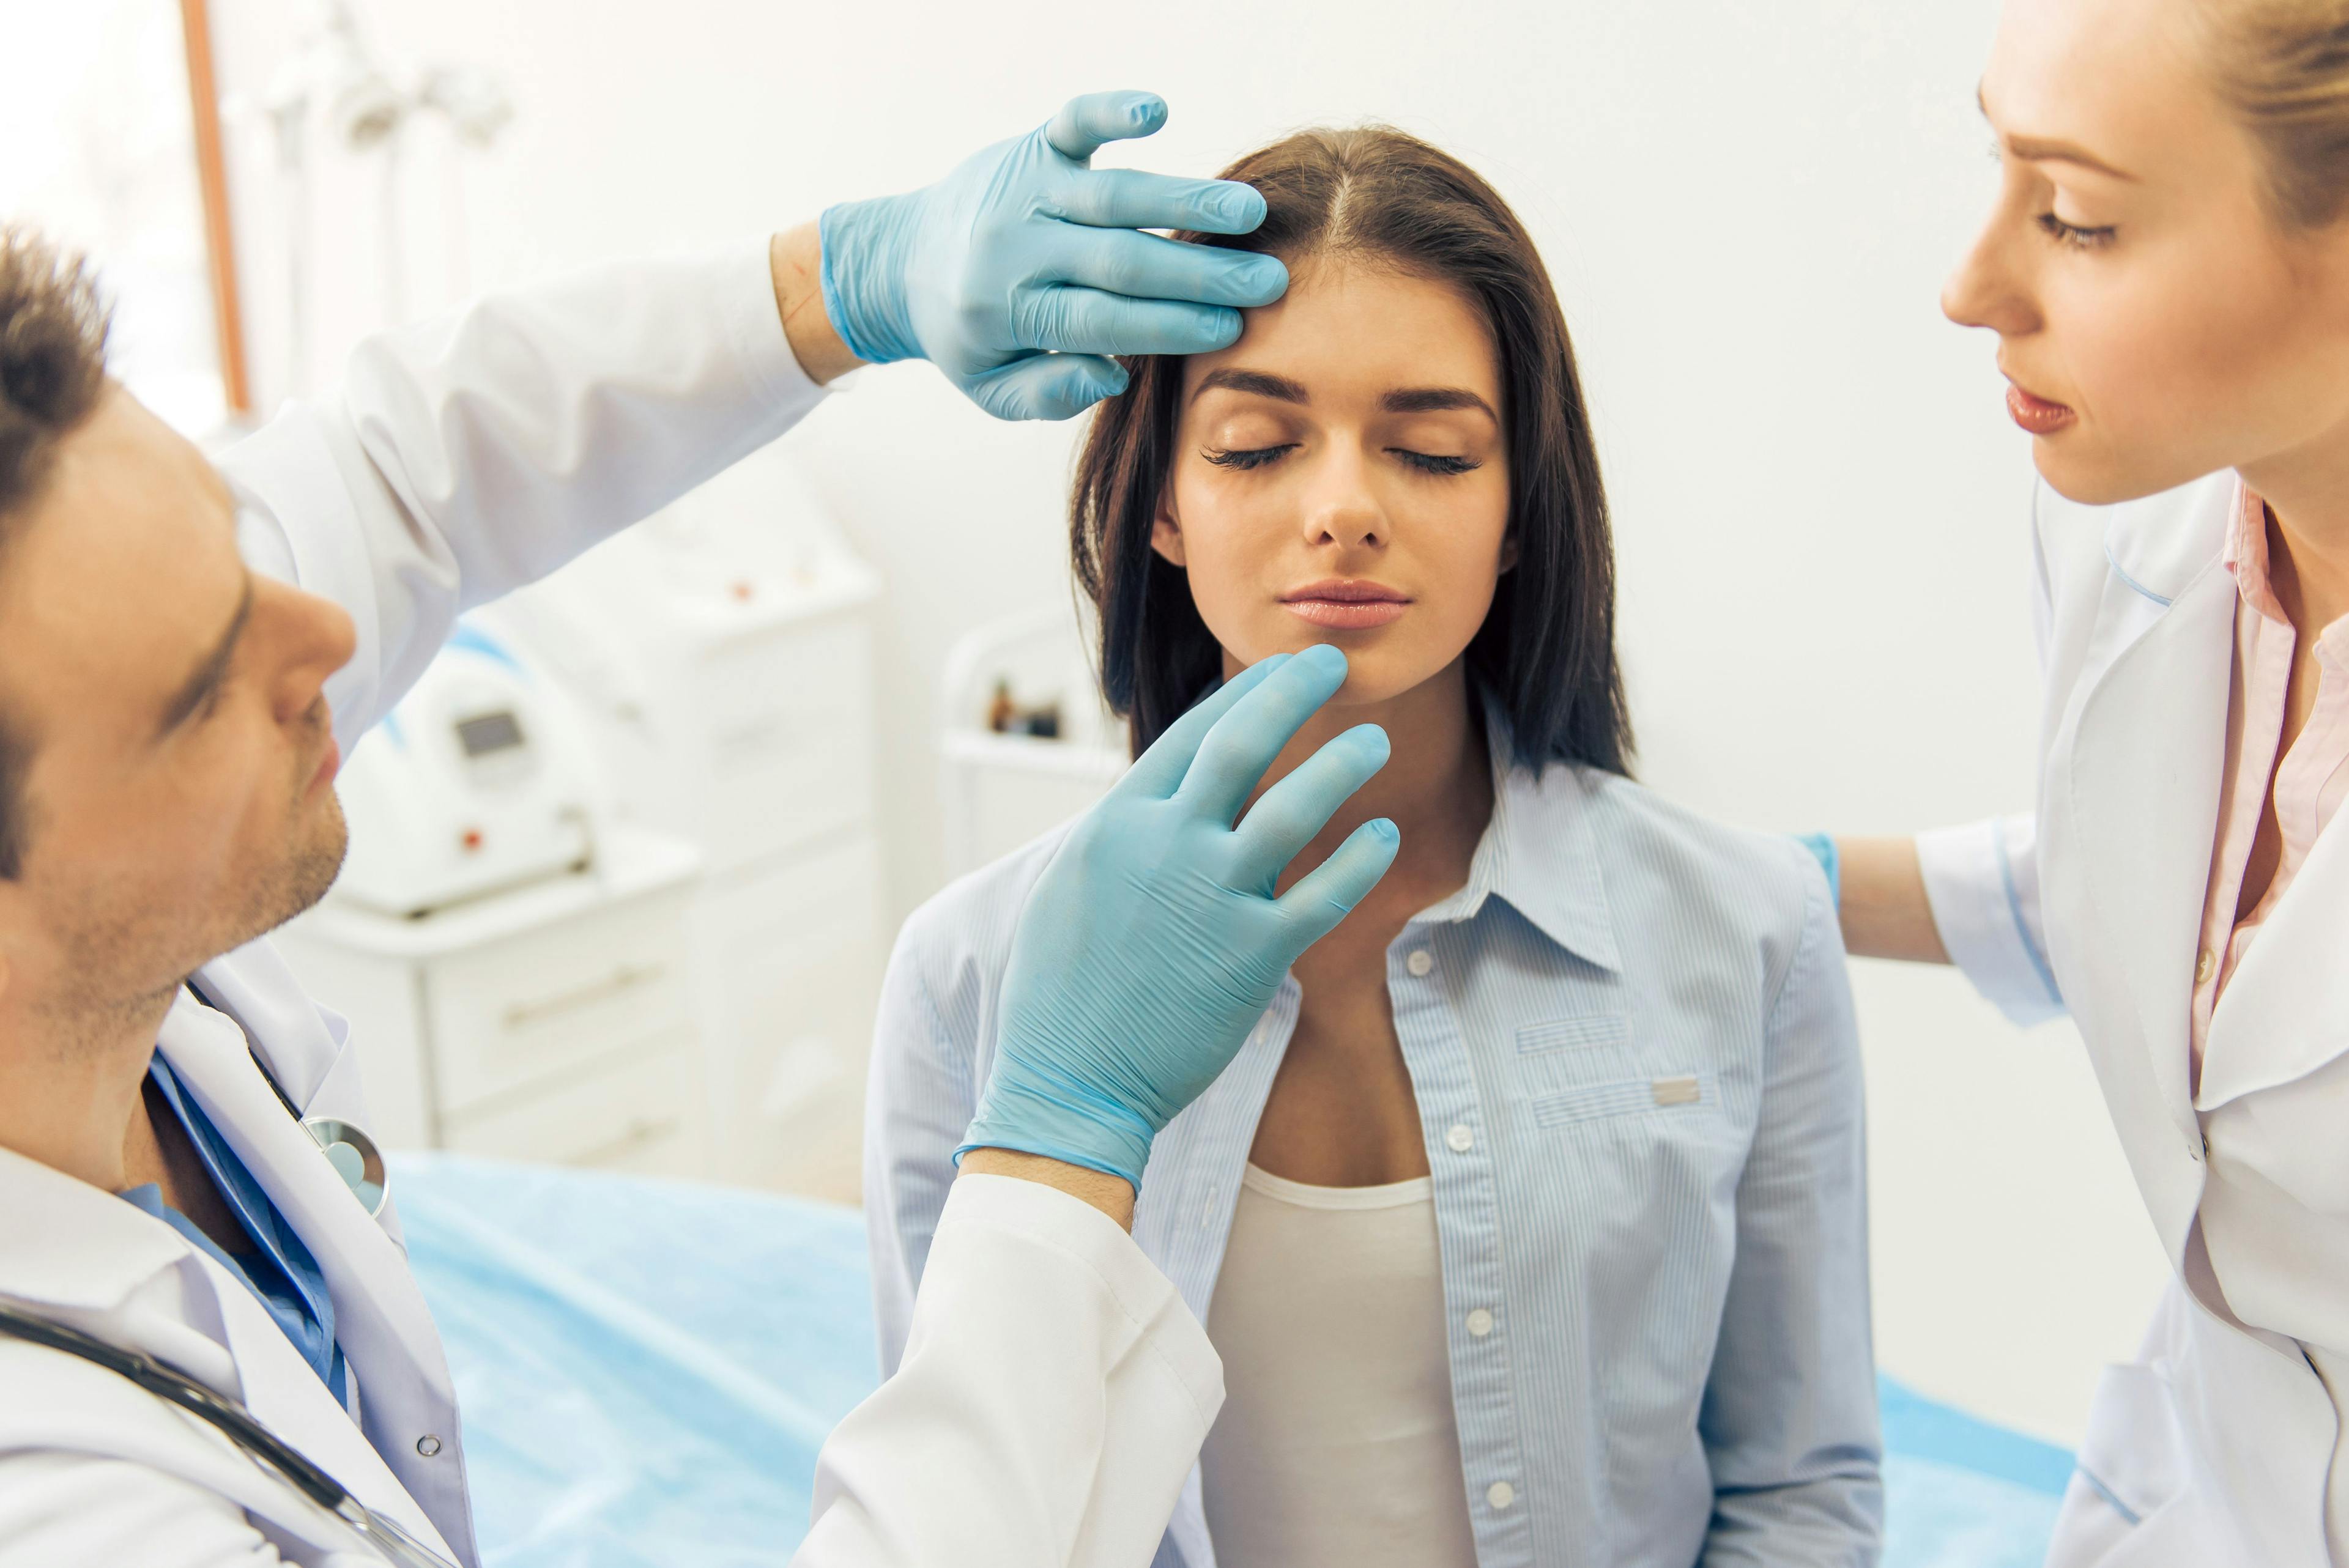 doctors examining a patient's face